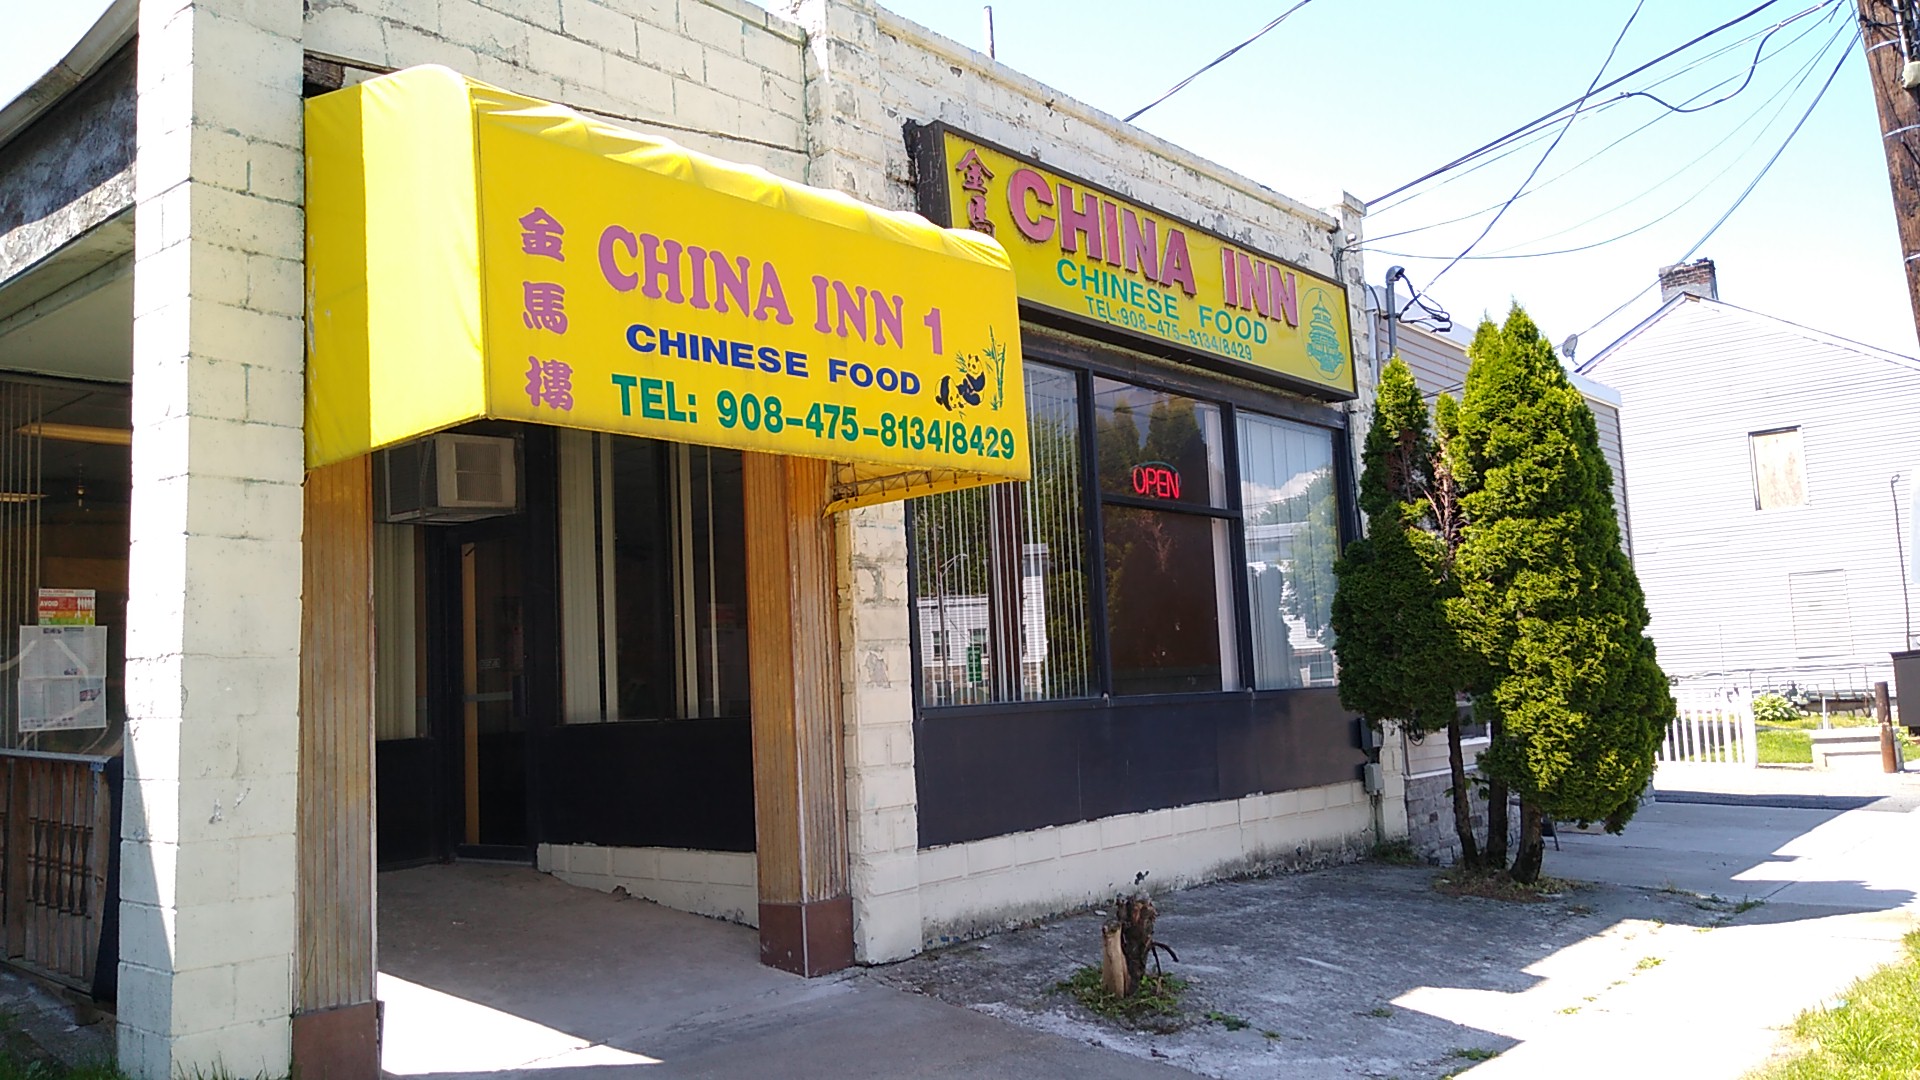 China Inn 1 Restaurant